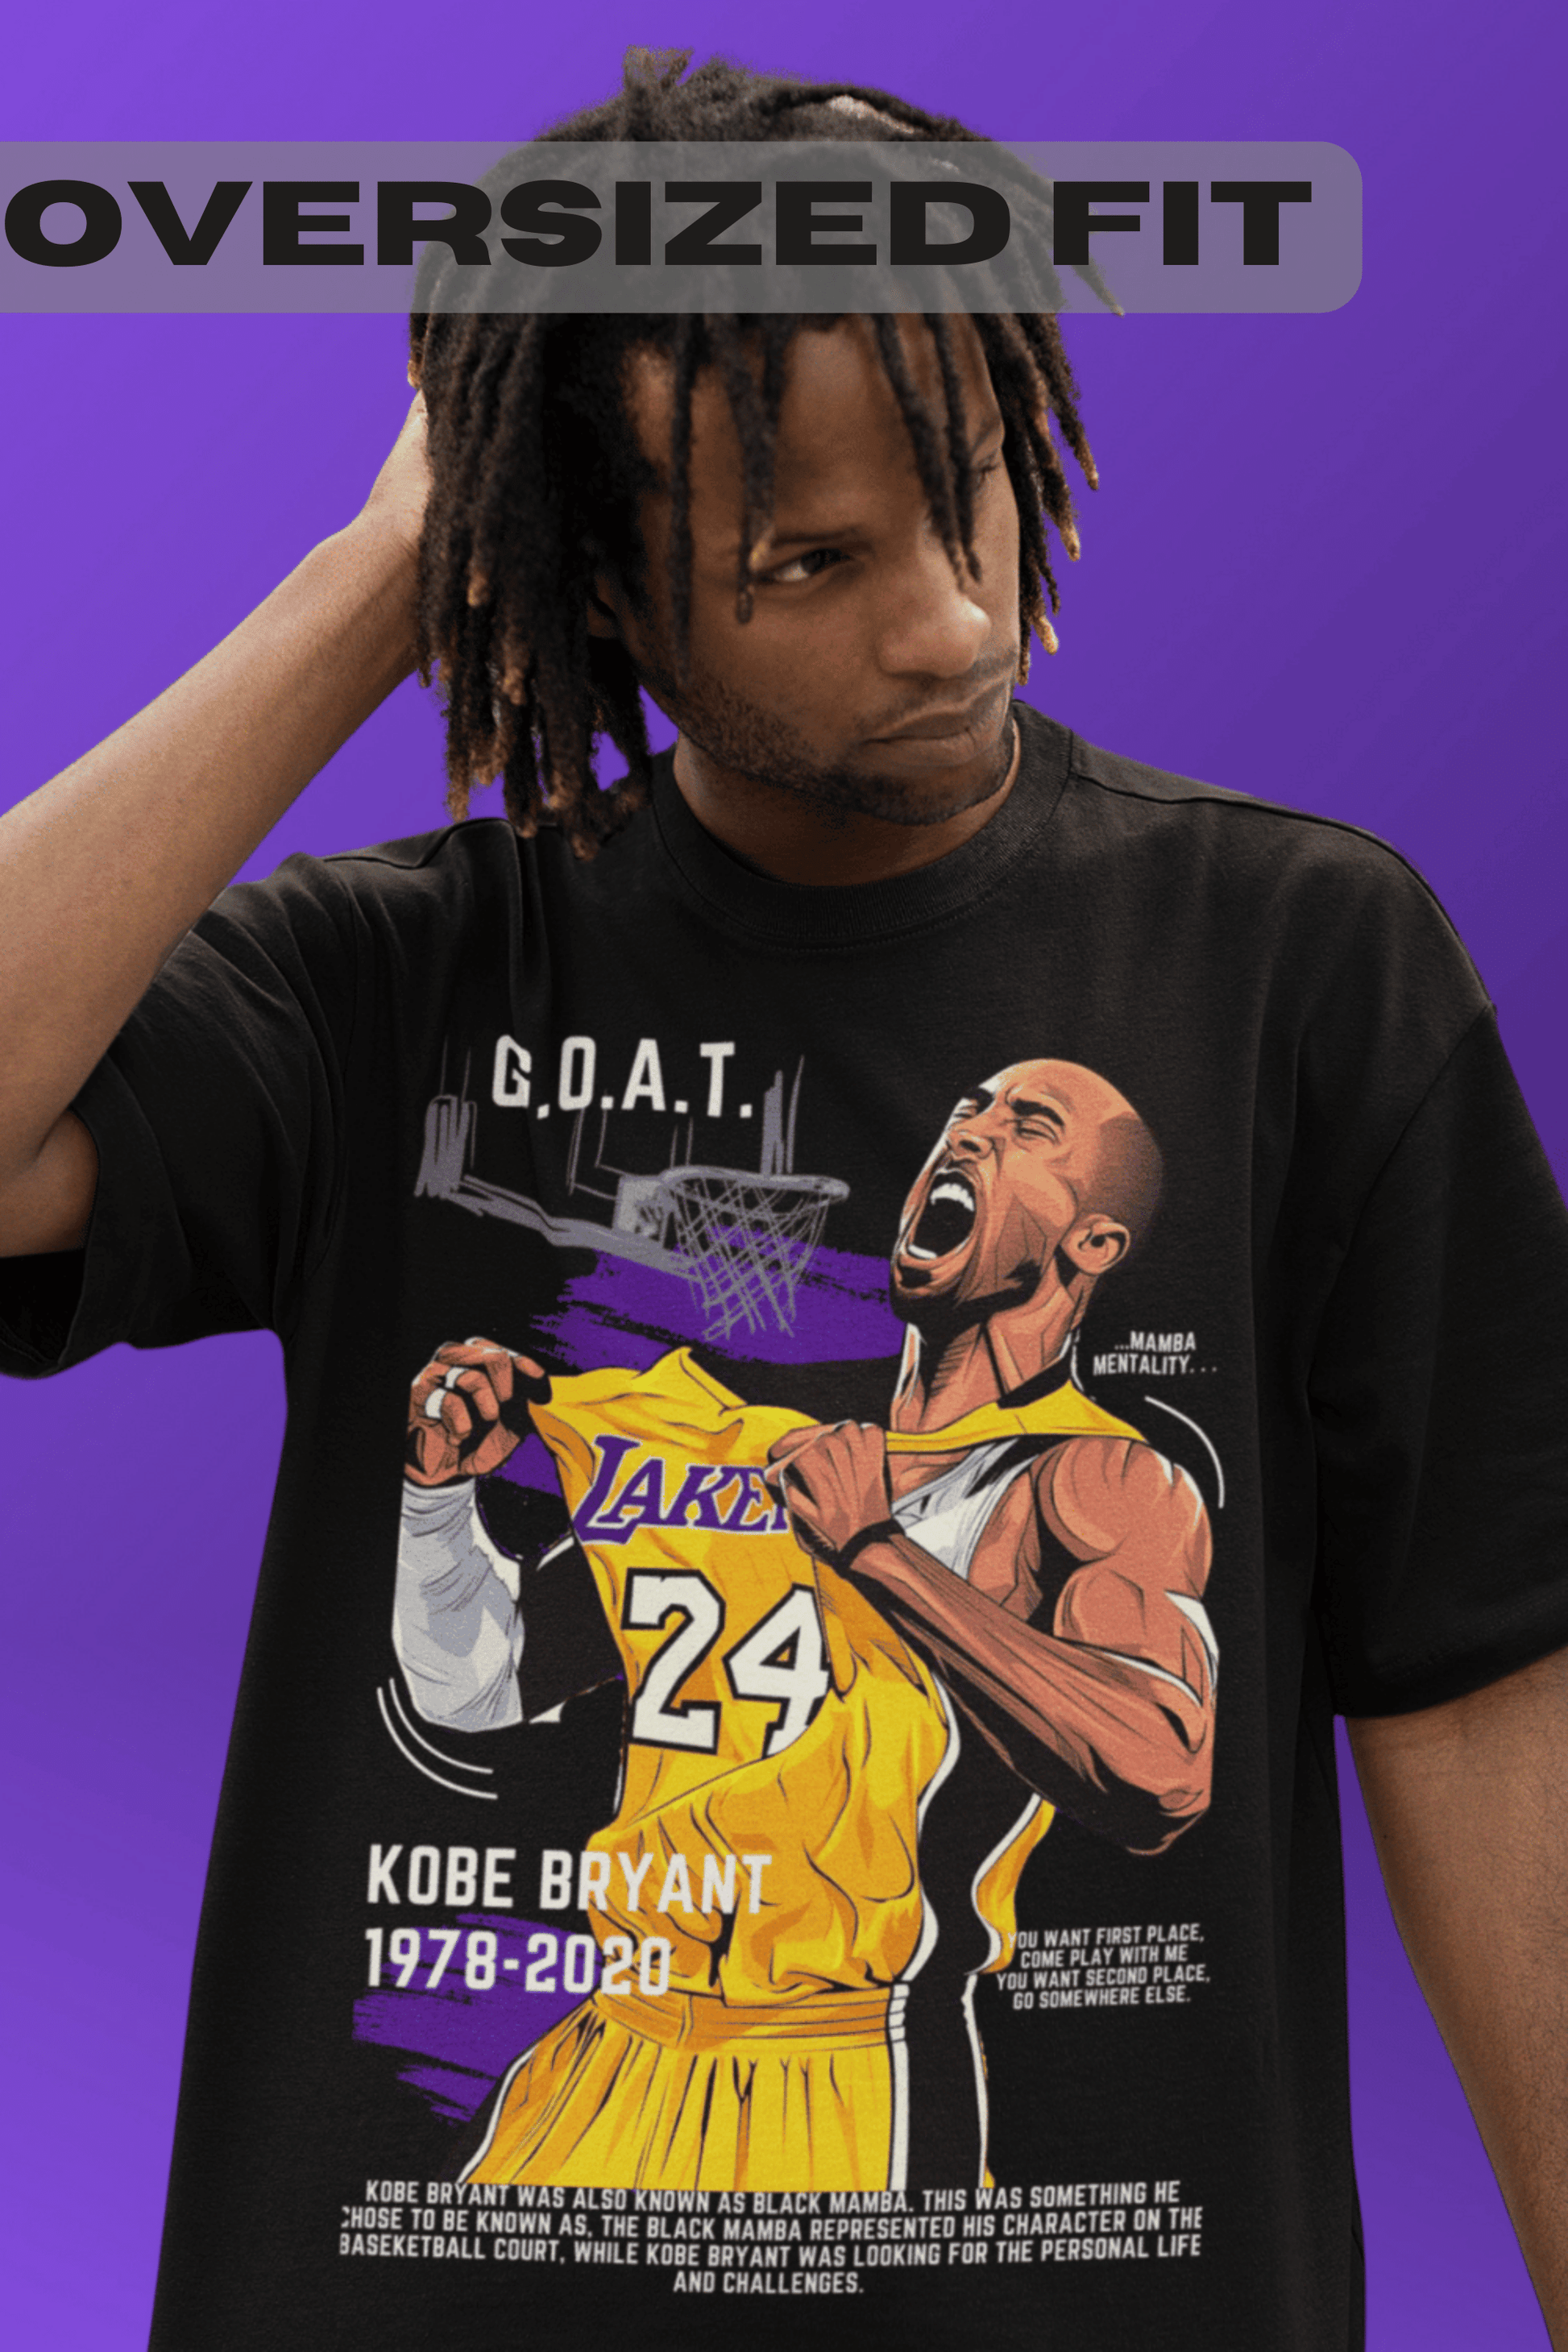 Black Mamba Kobe Bryant Los Angeles Lakers T-Shirt - TeeNavi